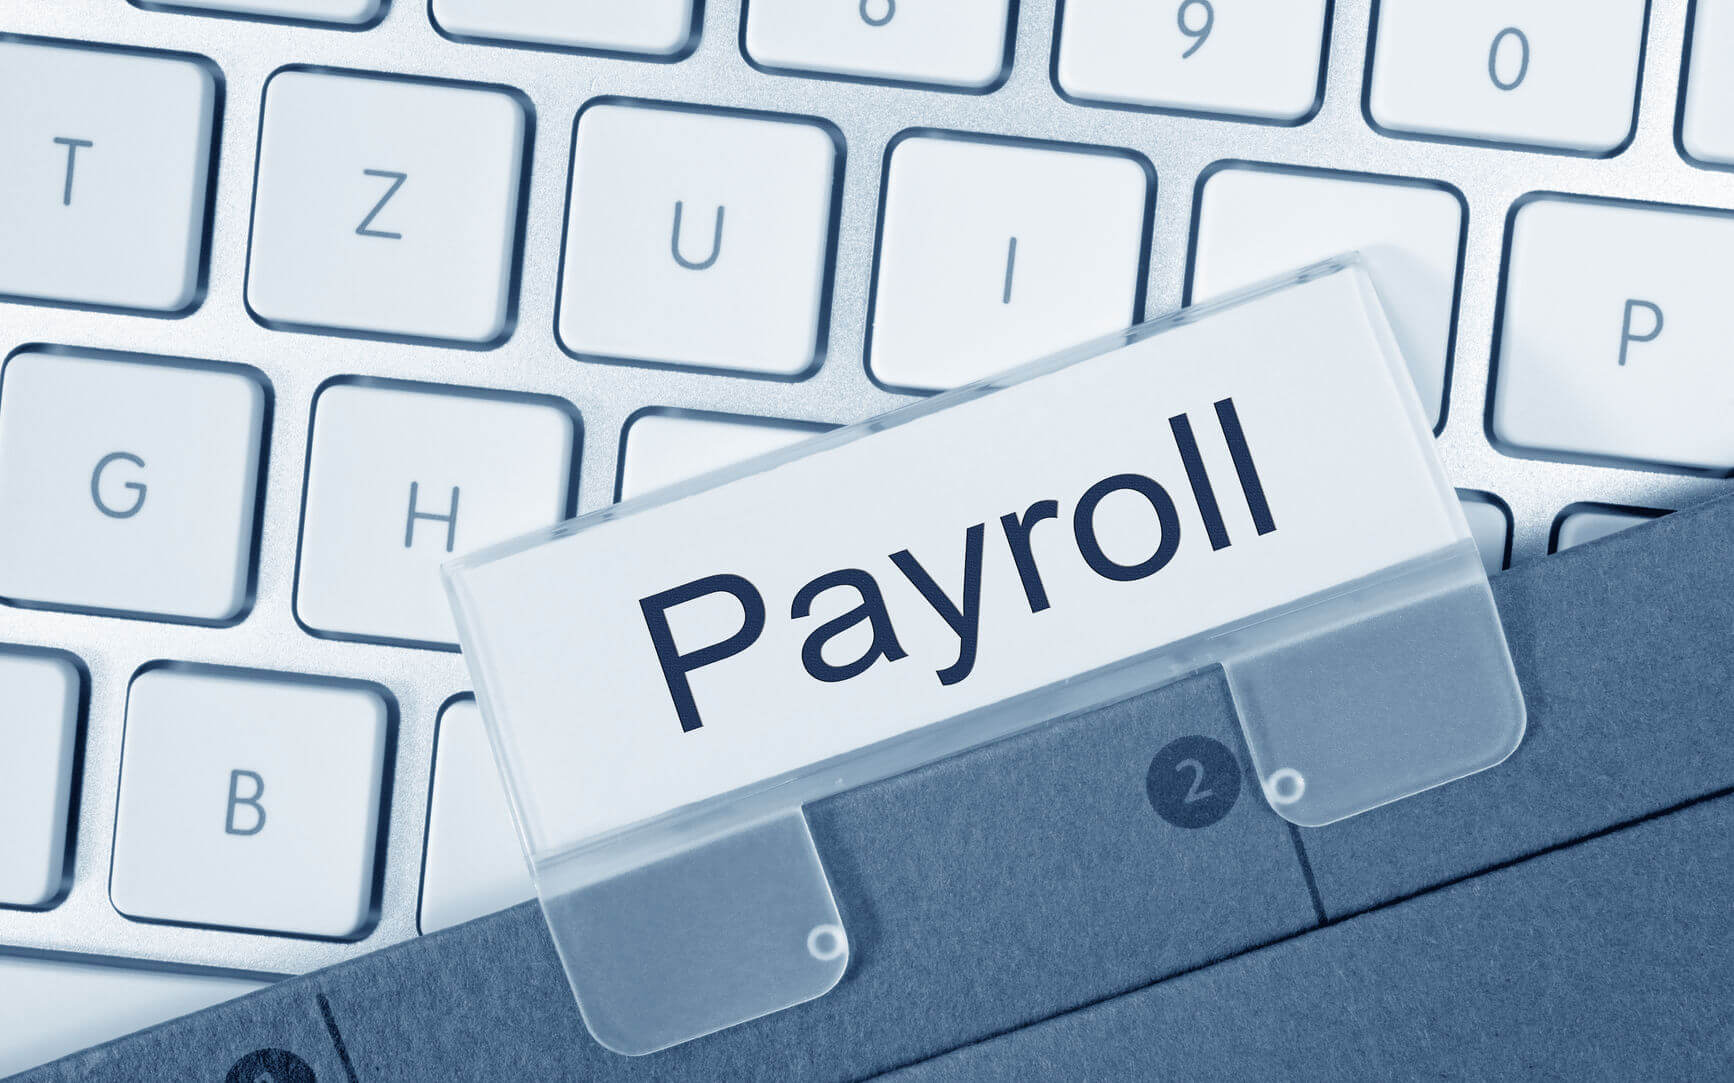 Payroll Service Provider